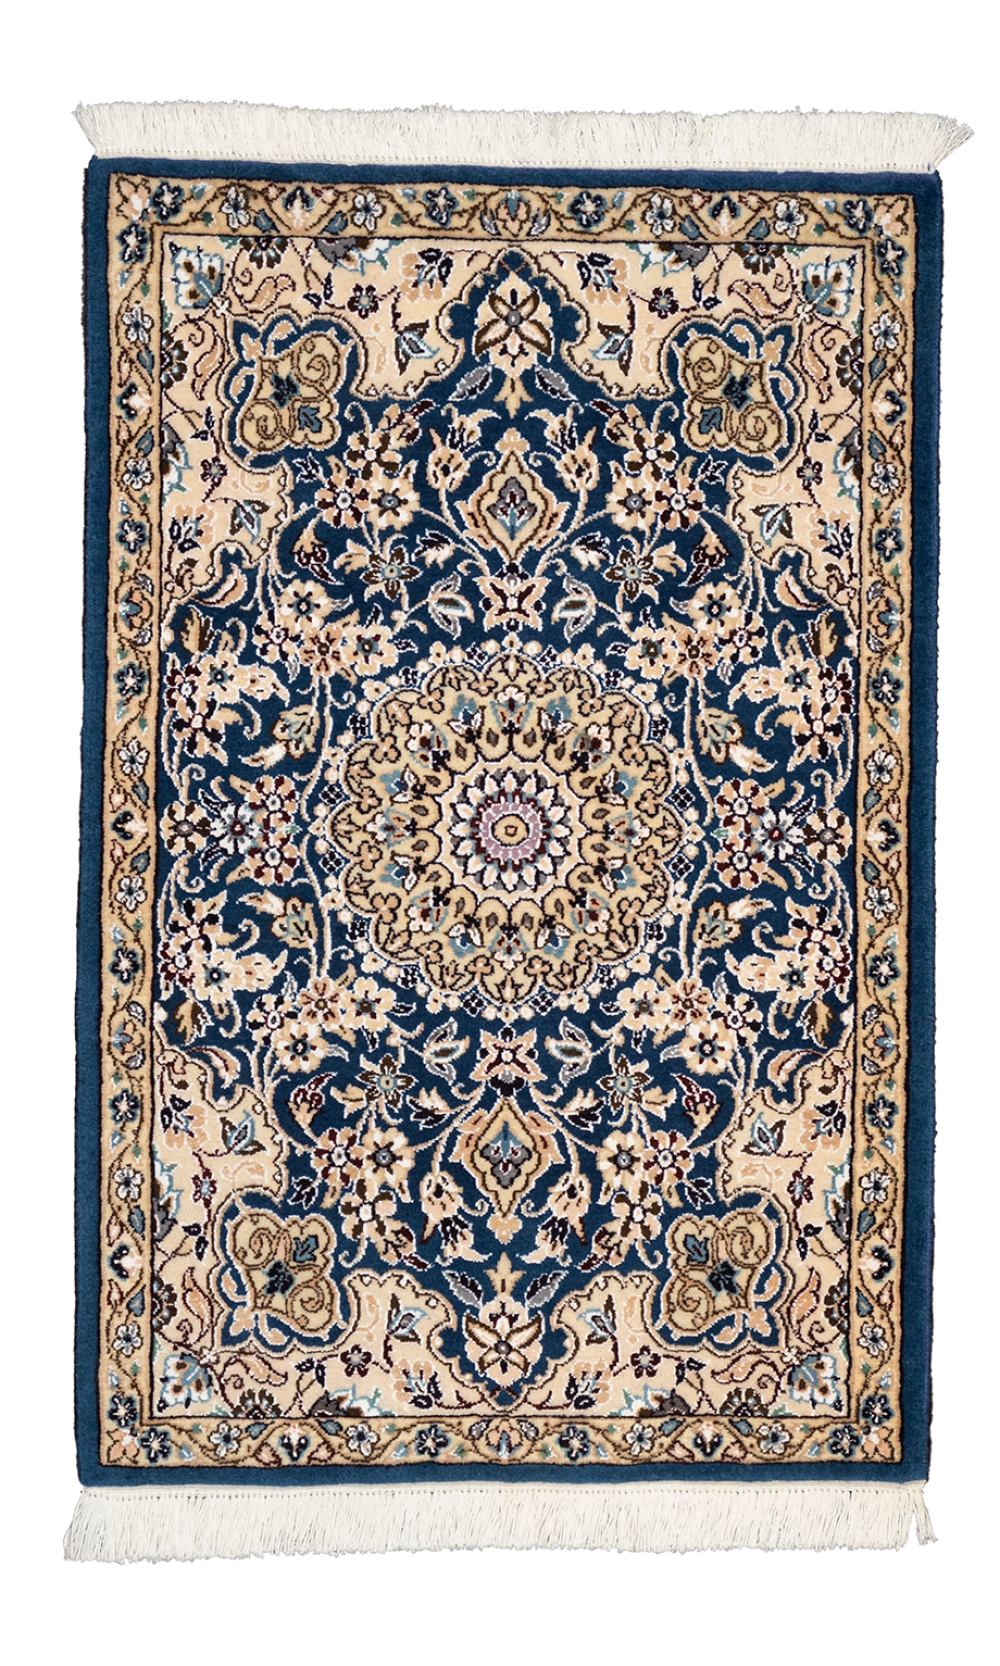 Handmade Wool Blue Color Naeen Isfahan Rug | 90×62 cm | Classic SHAAH ABBAASY Pattern